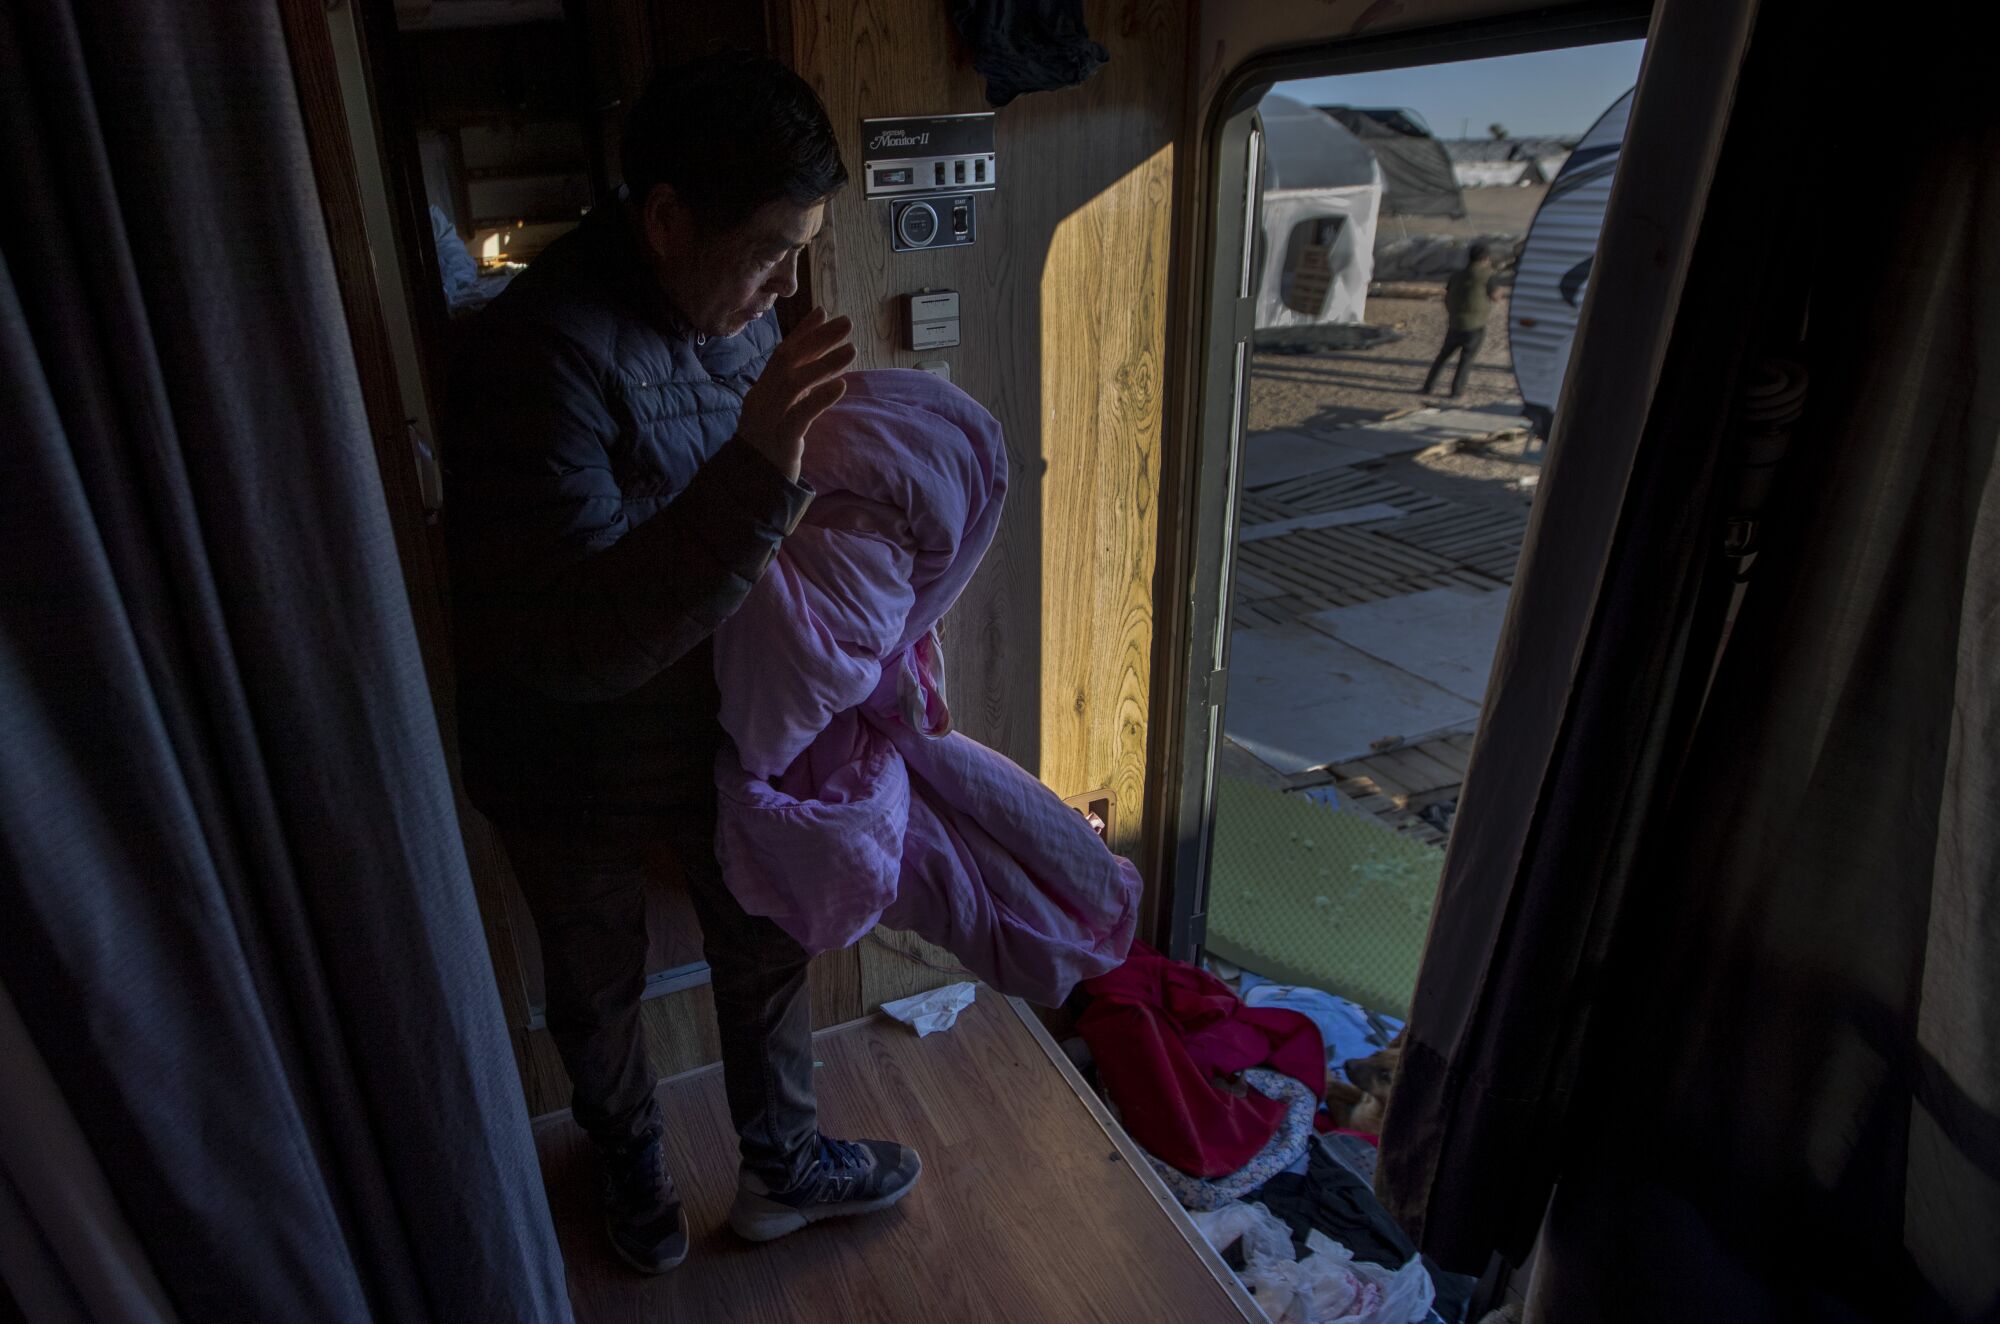  A worker gathers his belongings inside a trailer.